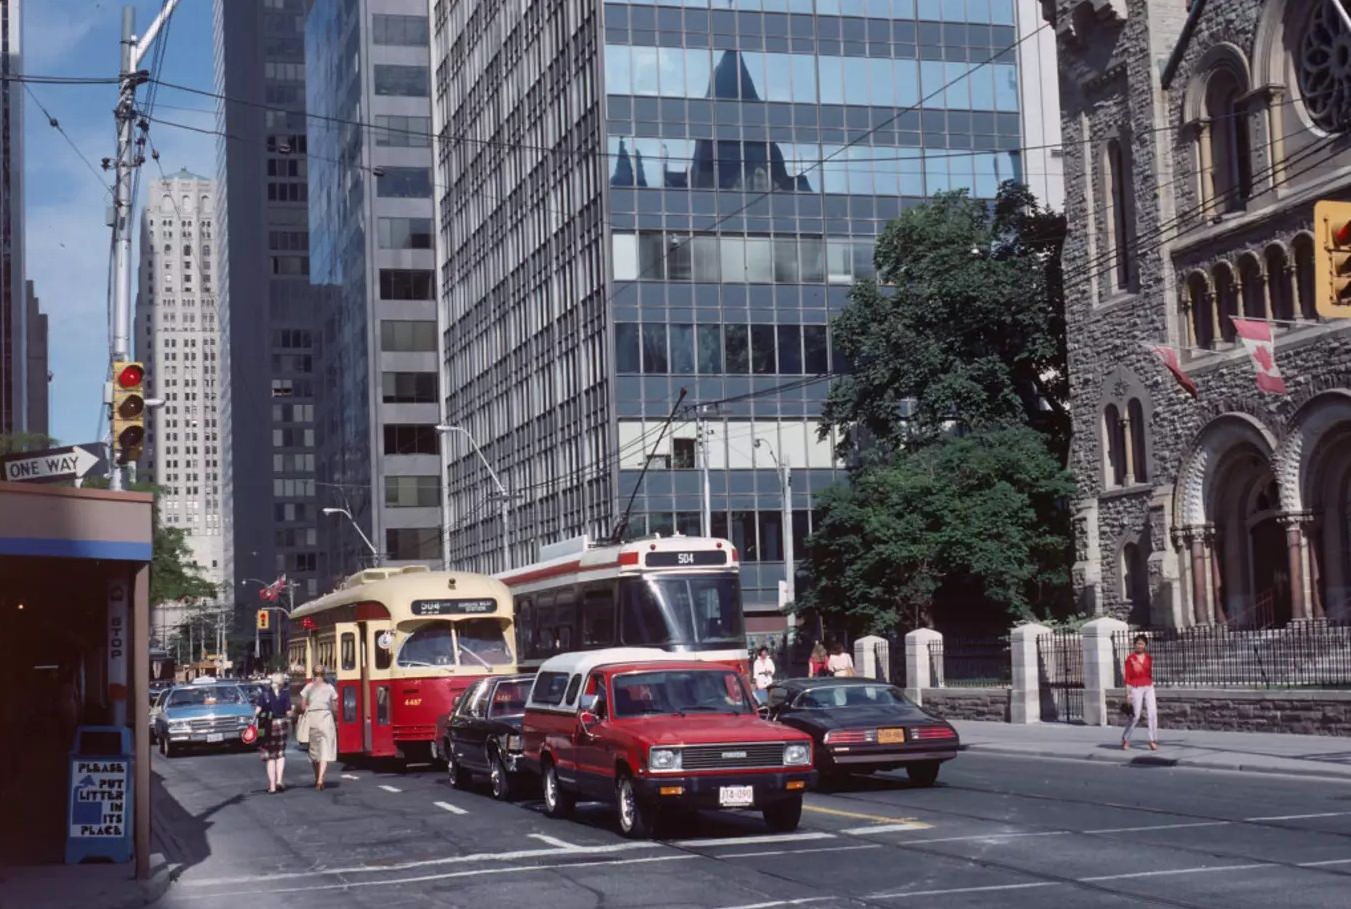 King and Simcoe streets, 1980s